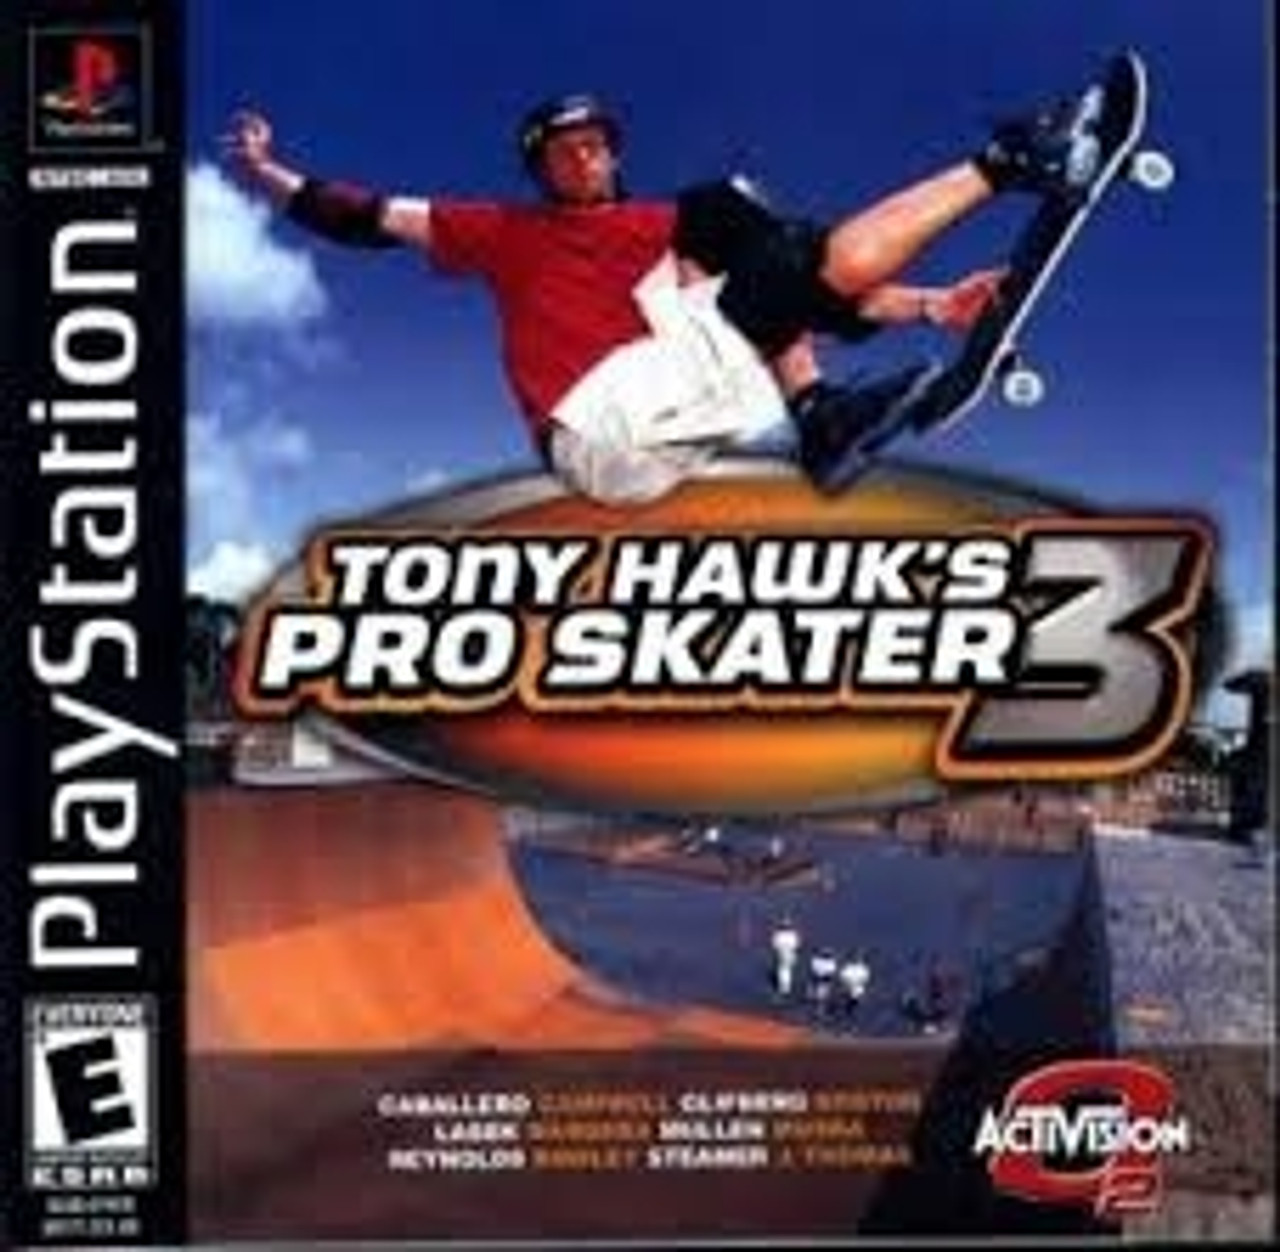 Skate 3 - PS3 - Super Retro - Playstation 3